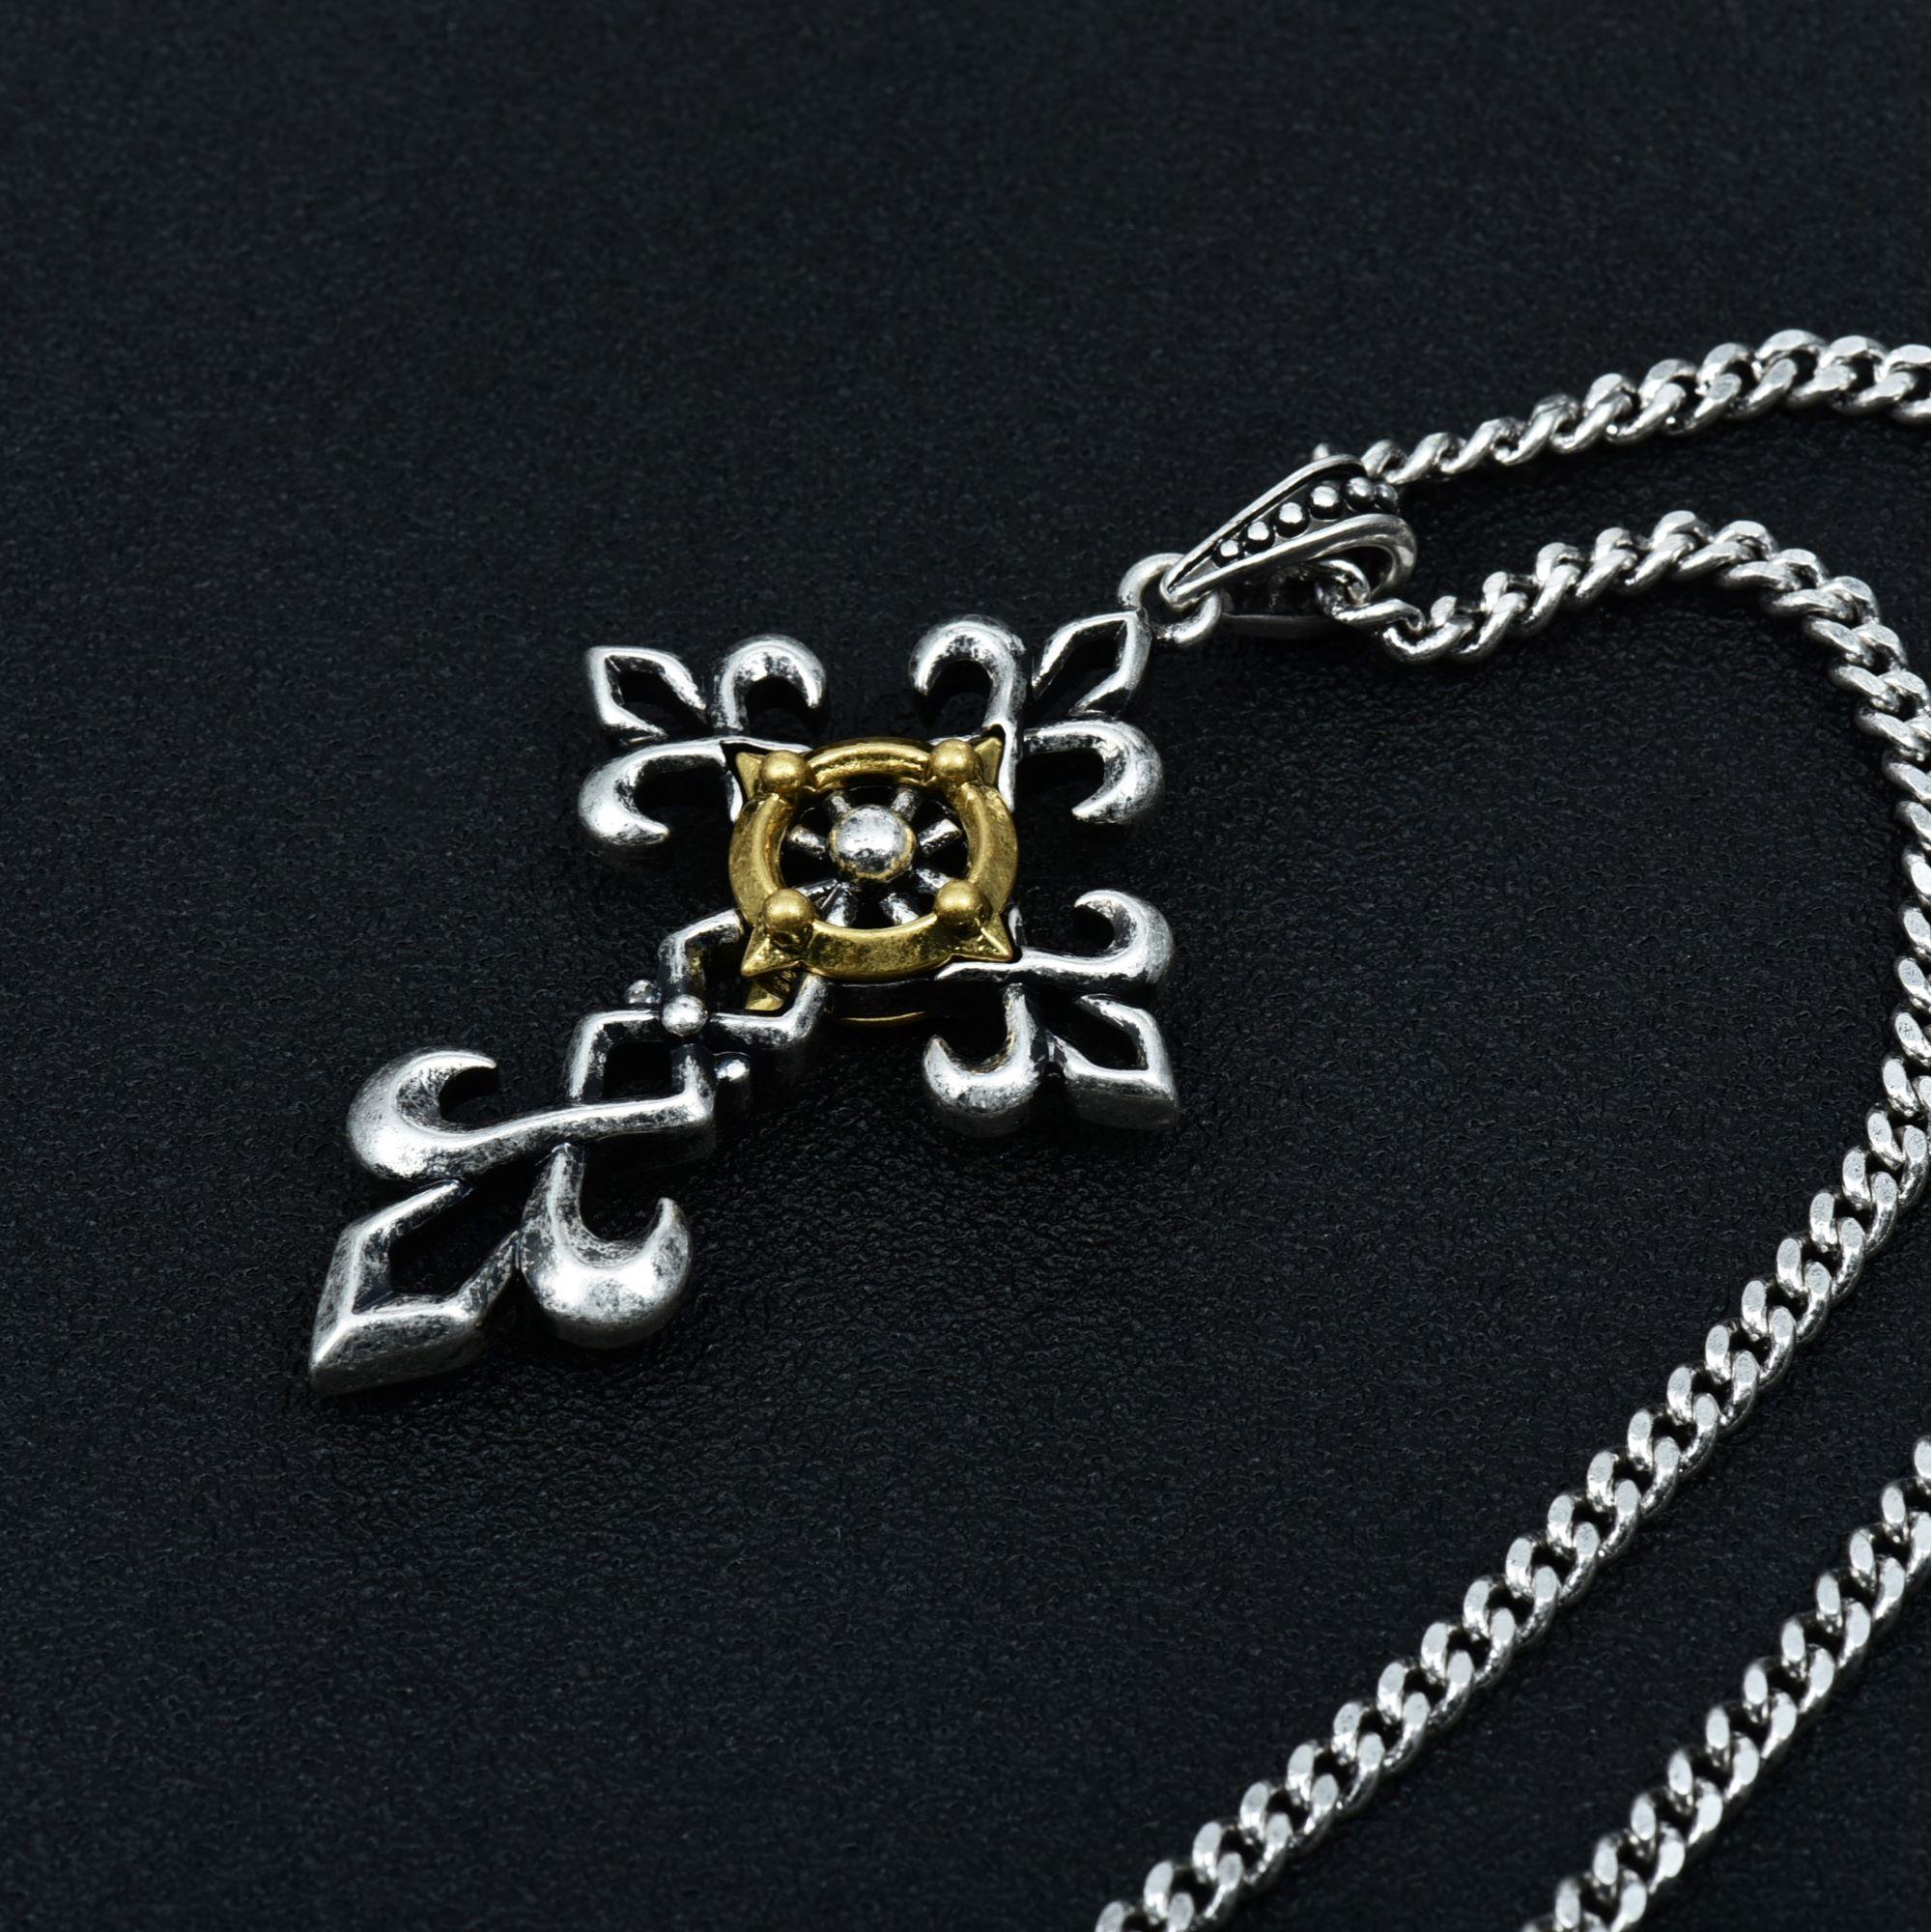 Necklace, RMB 499.00